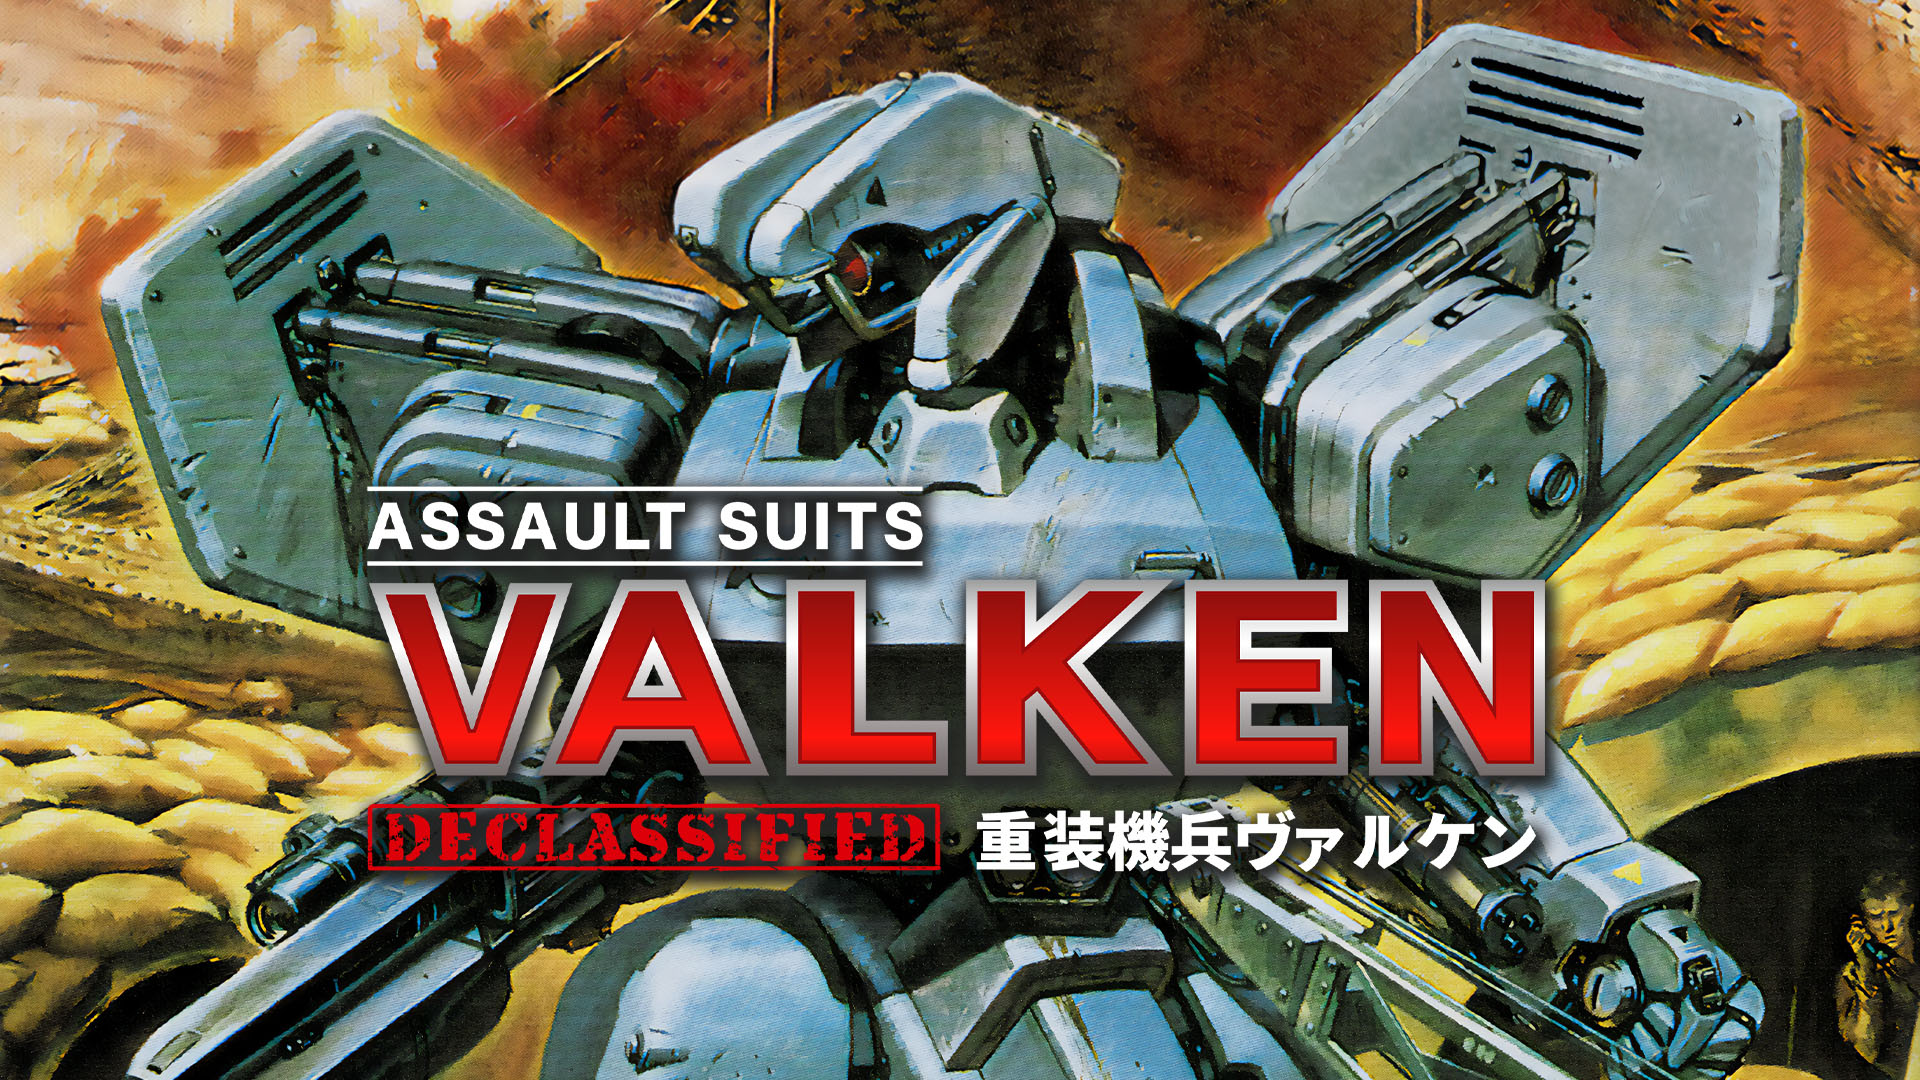 Assault Suits Valken Declassified announced